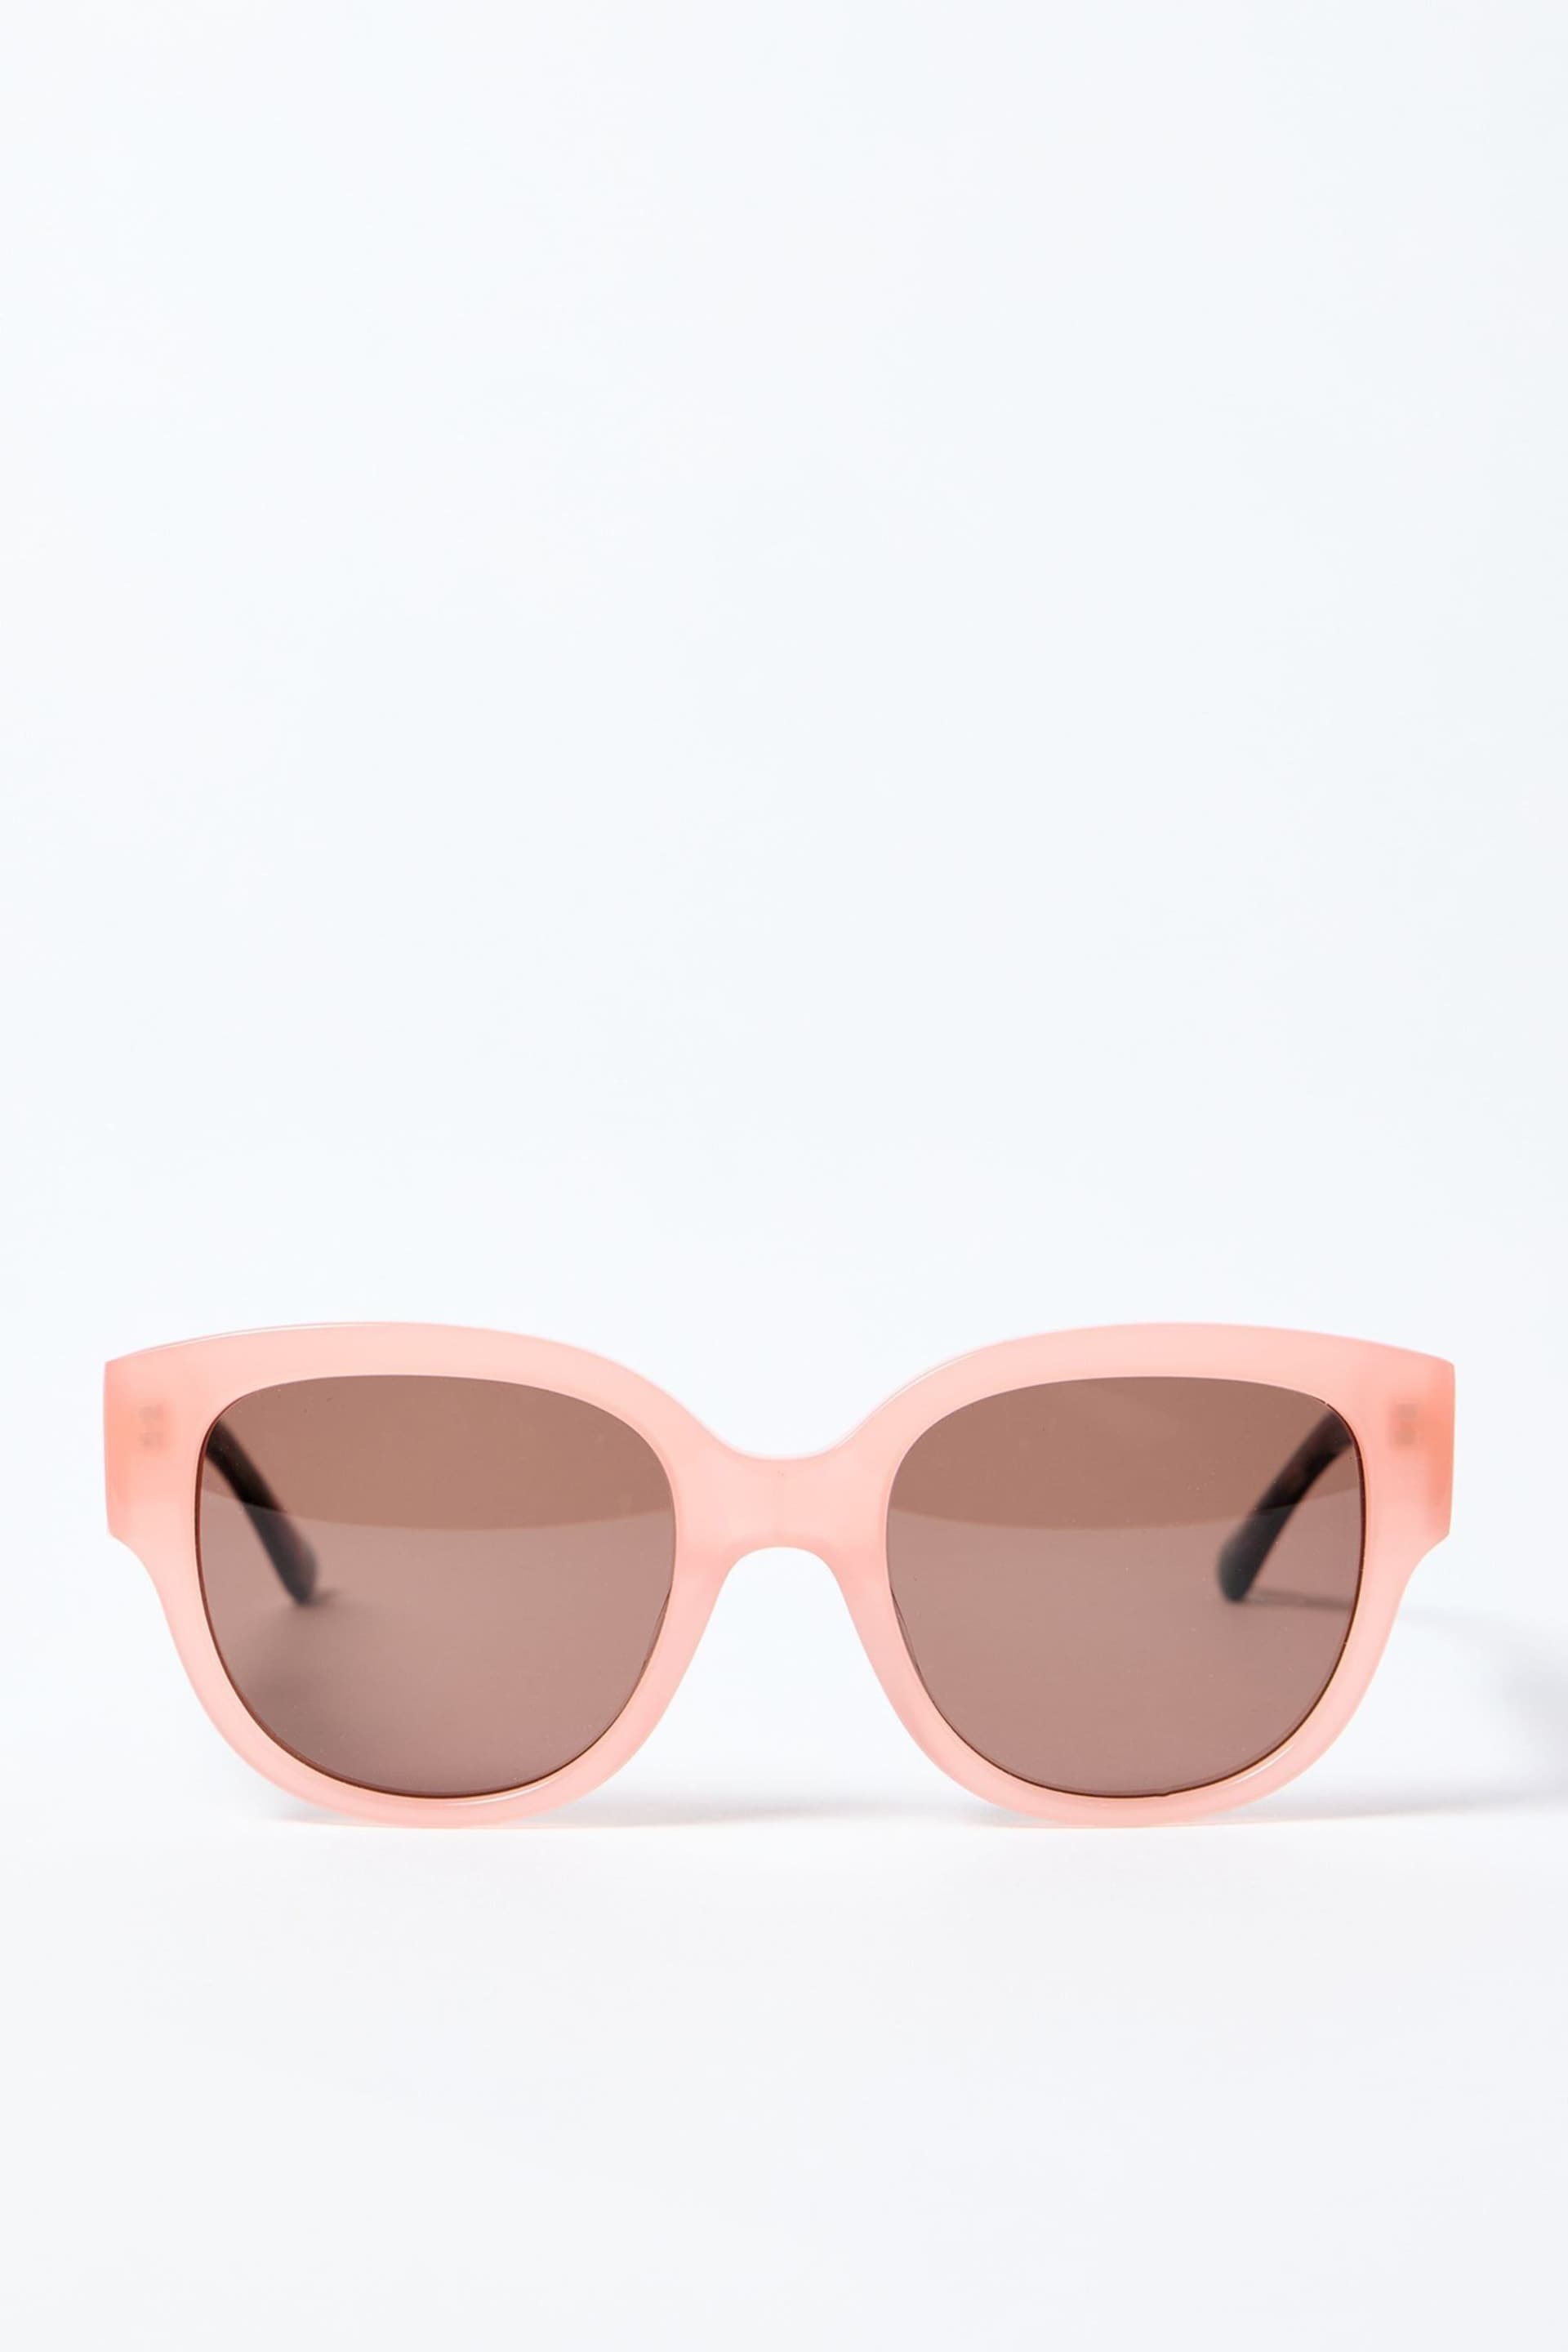 Oliver Bonas Pink Faux Fur Marbled Acetate Sunglasses - Image 3 of 6